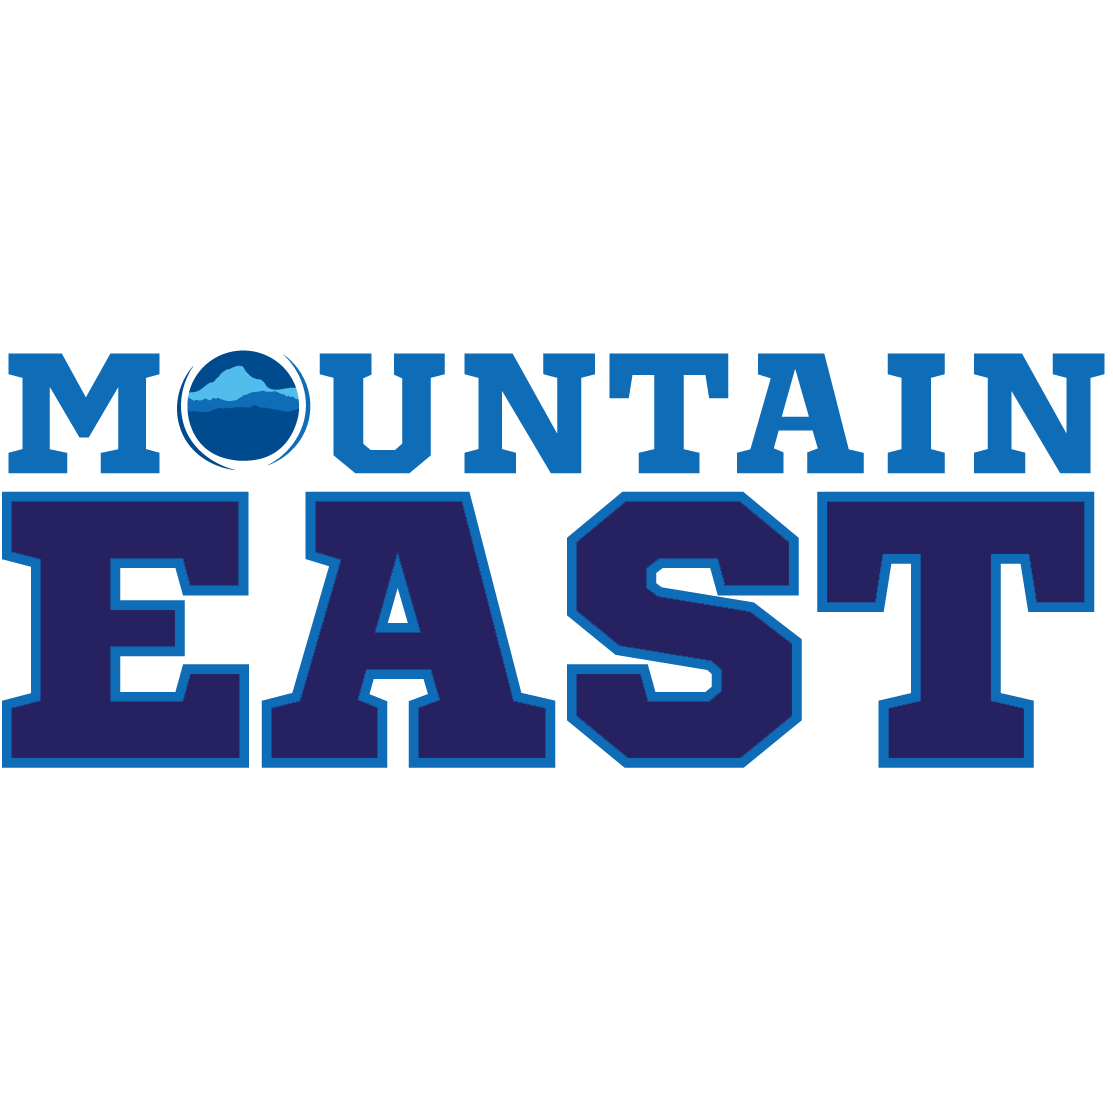 West East Conferences logos. Facts logo. Mt content